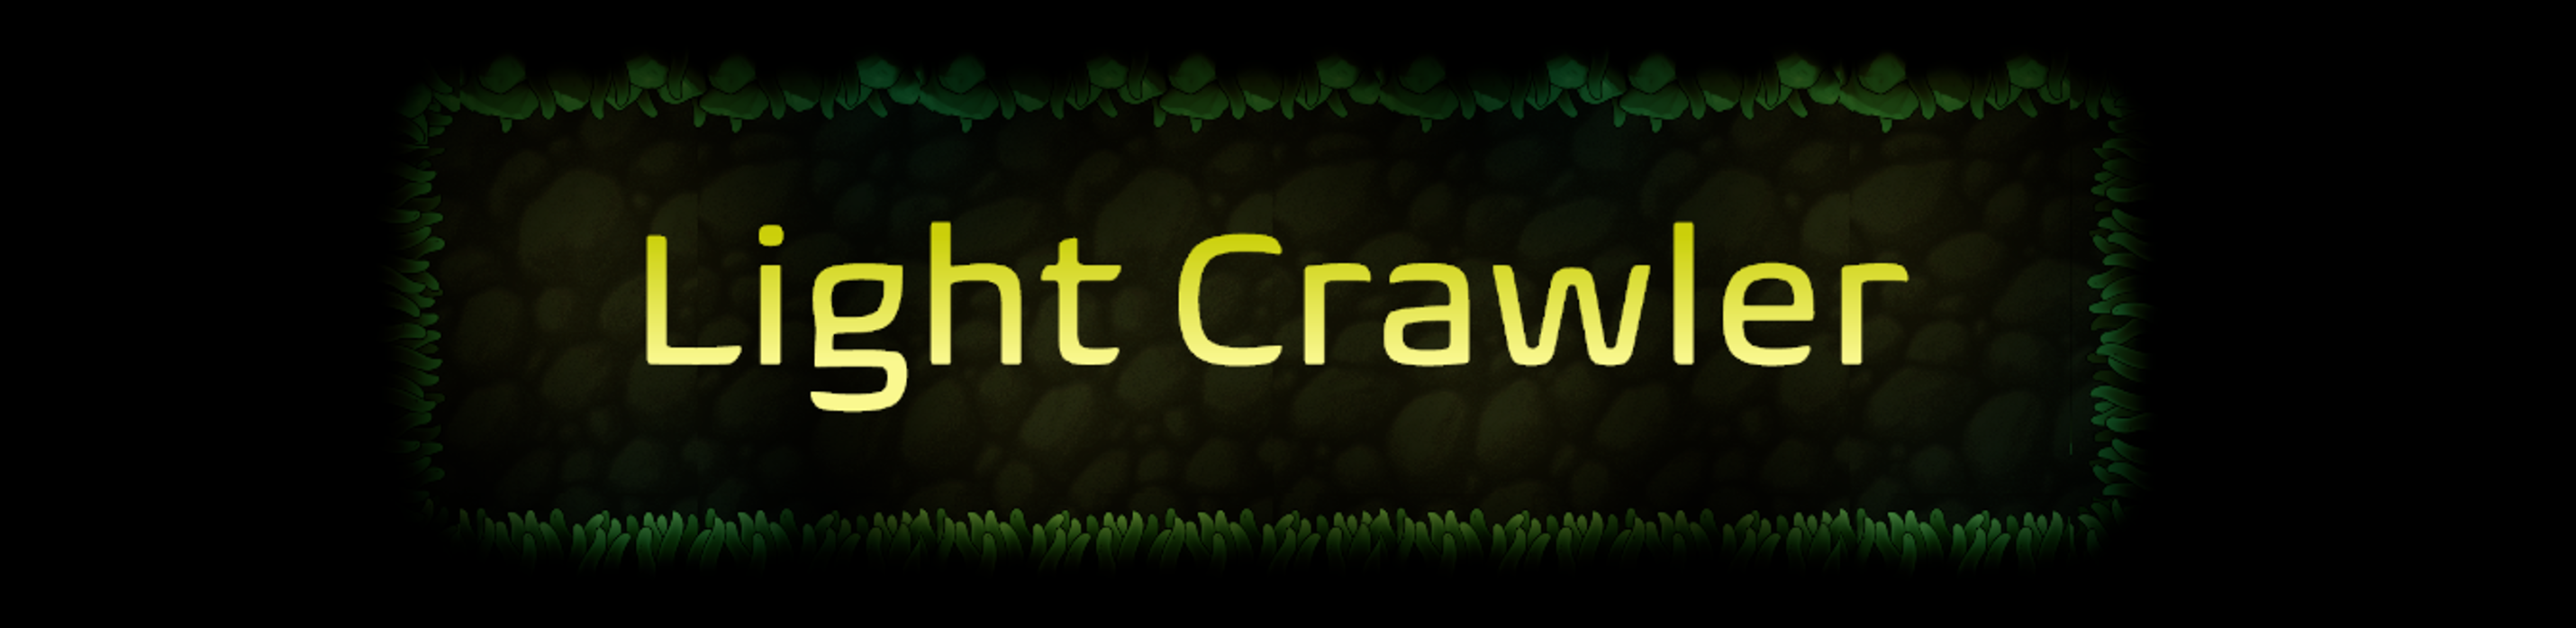 Light Crawler